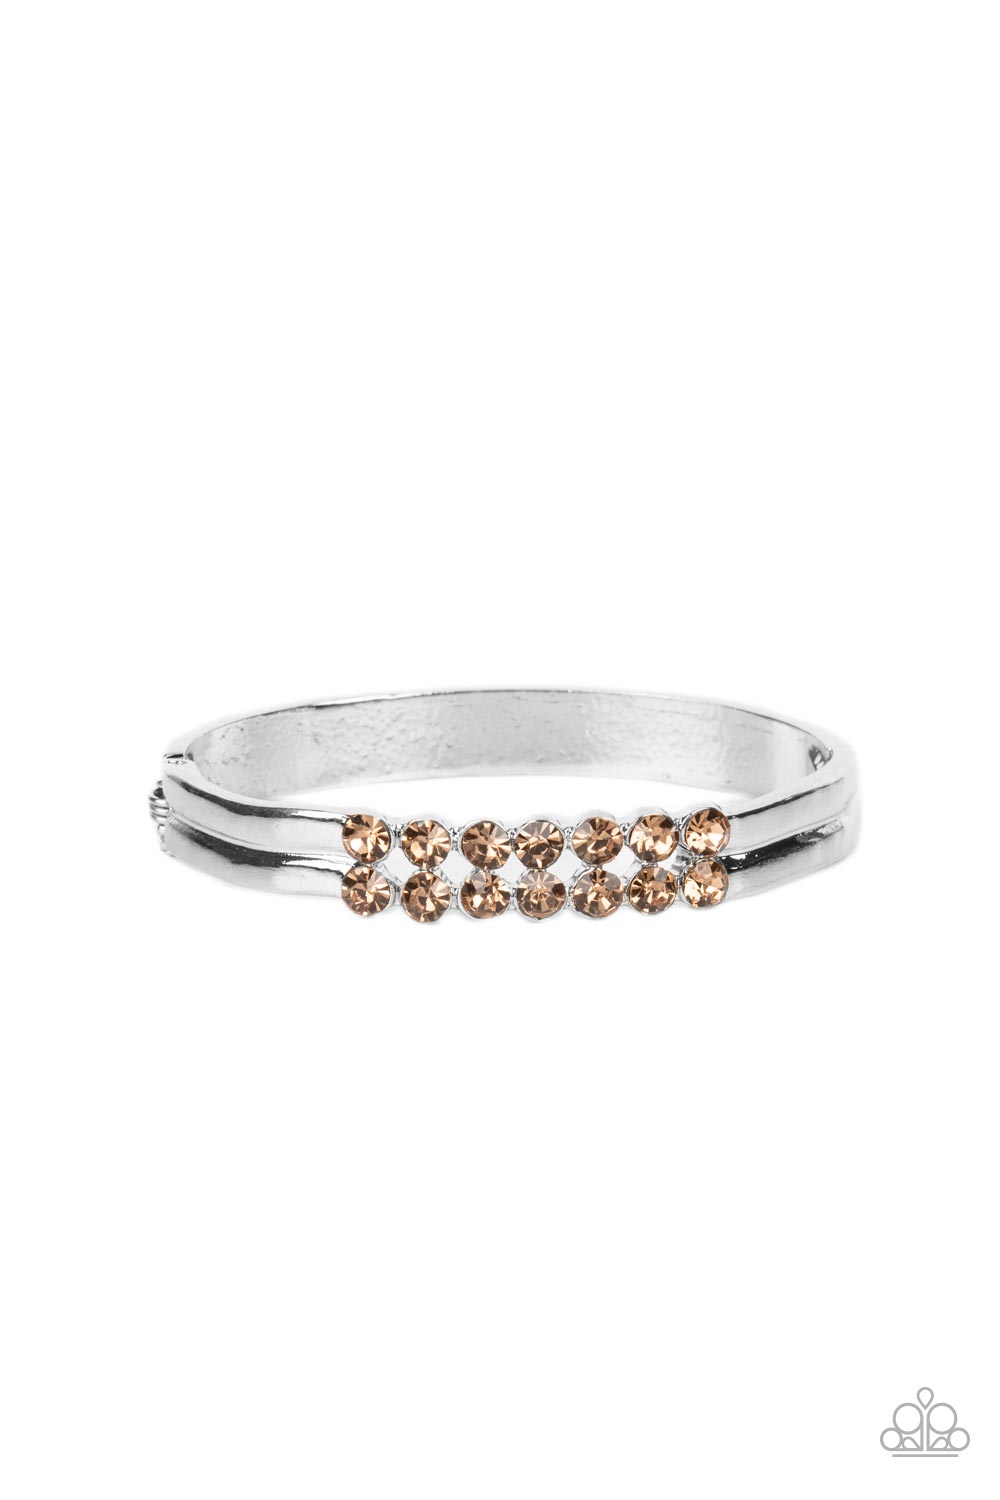 Doubled Down Dazzle Brown Rhinestone Bracelet - Paparazzi Accessories- lightbox - CarasShop.com - $5 Jewelry by Cara Jewels